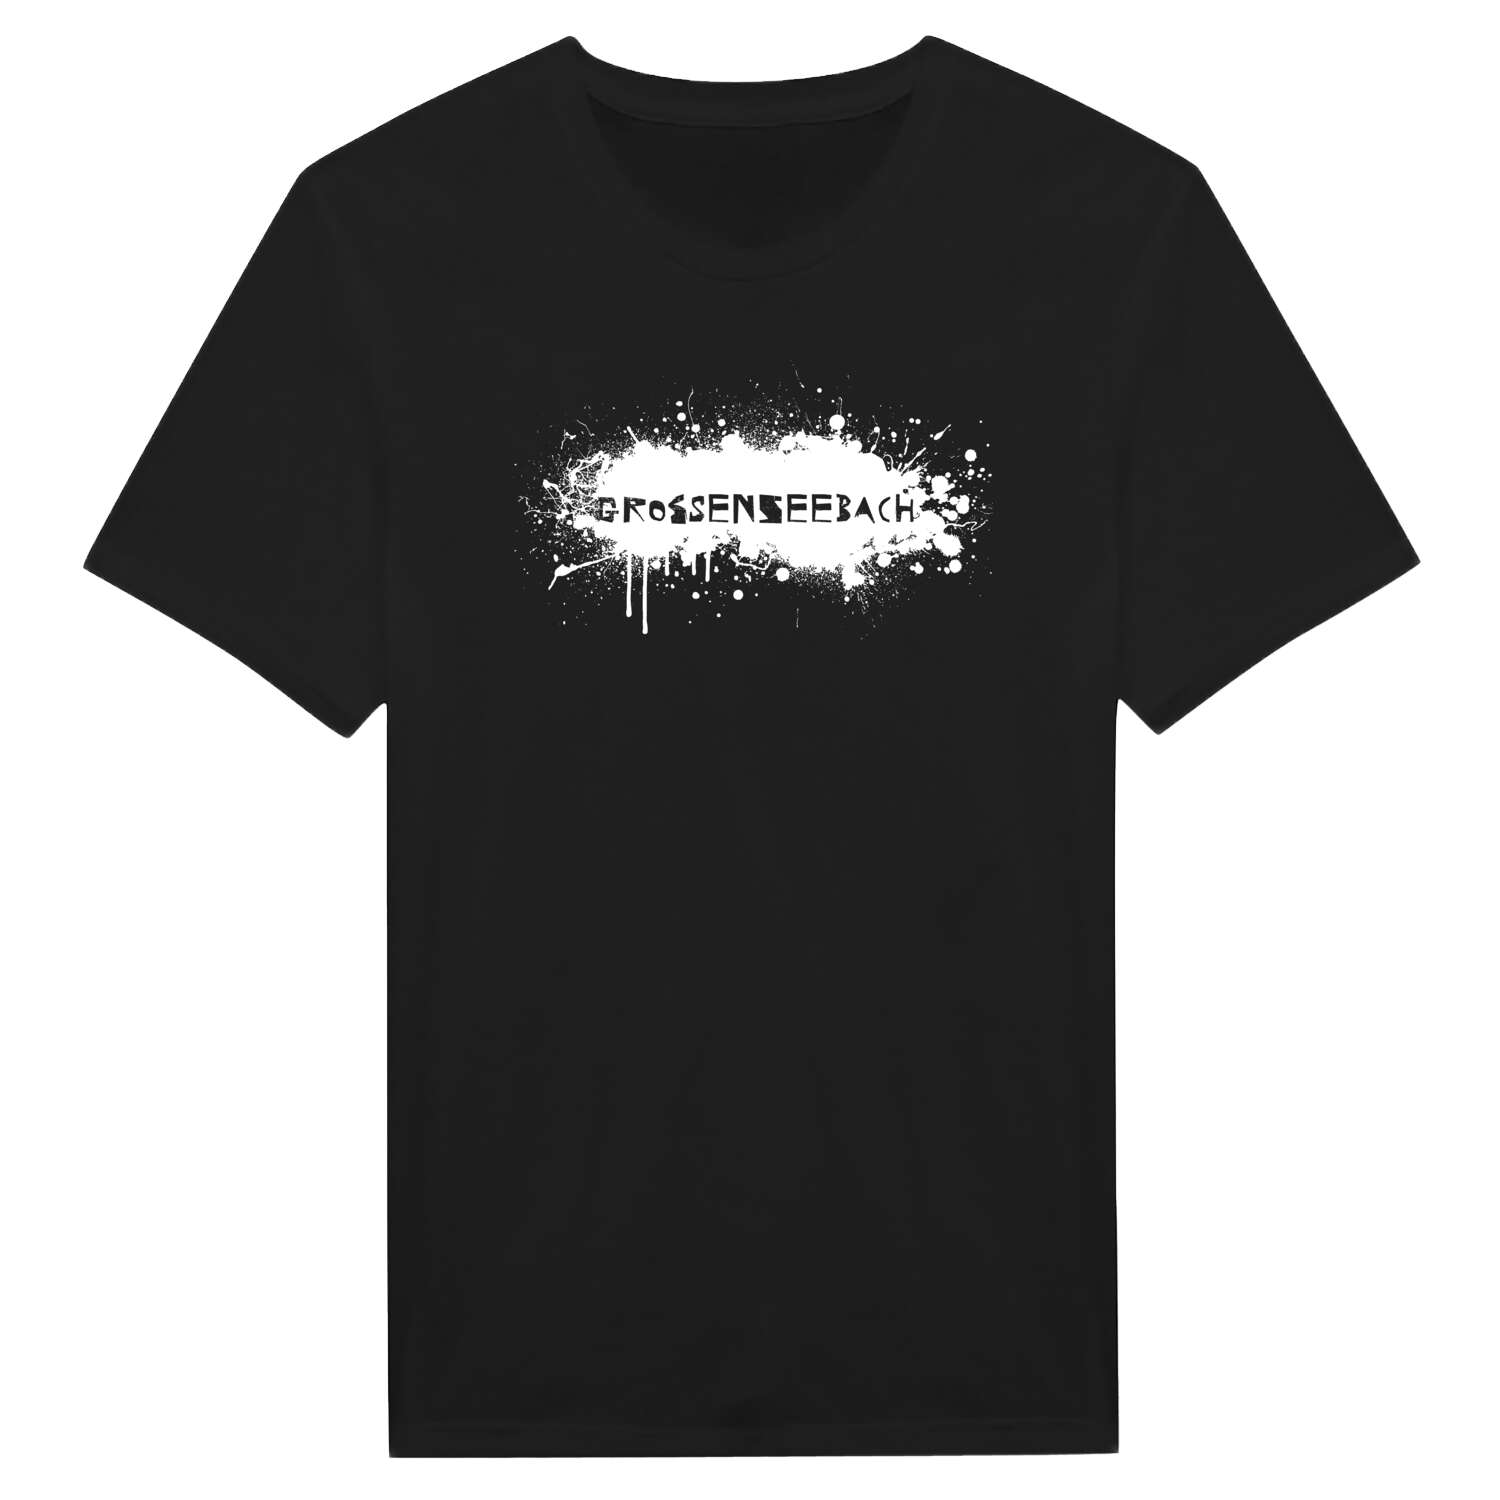 Großenseebach T-Shirt »Paint Splash Punk«